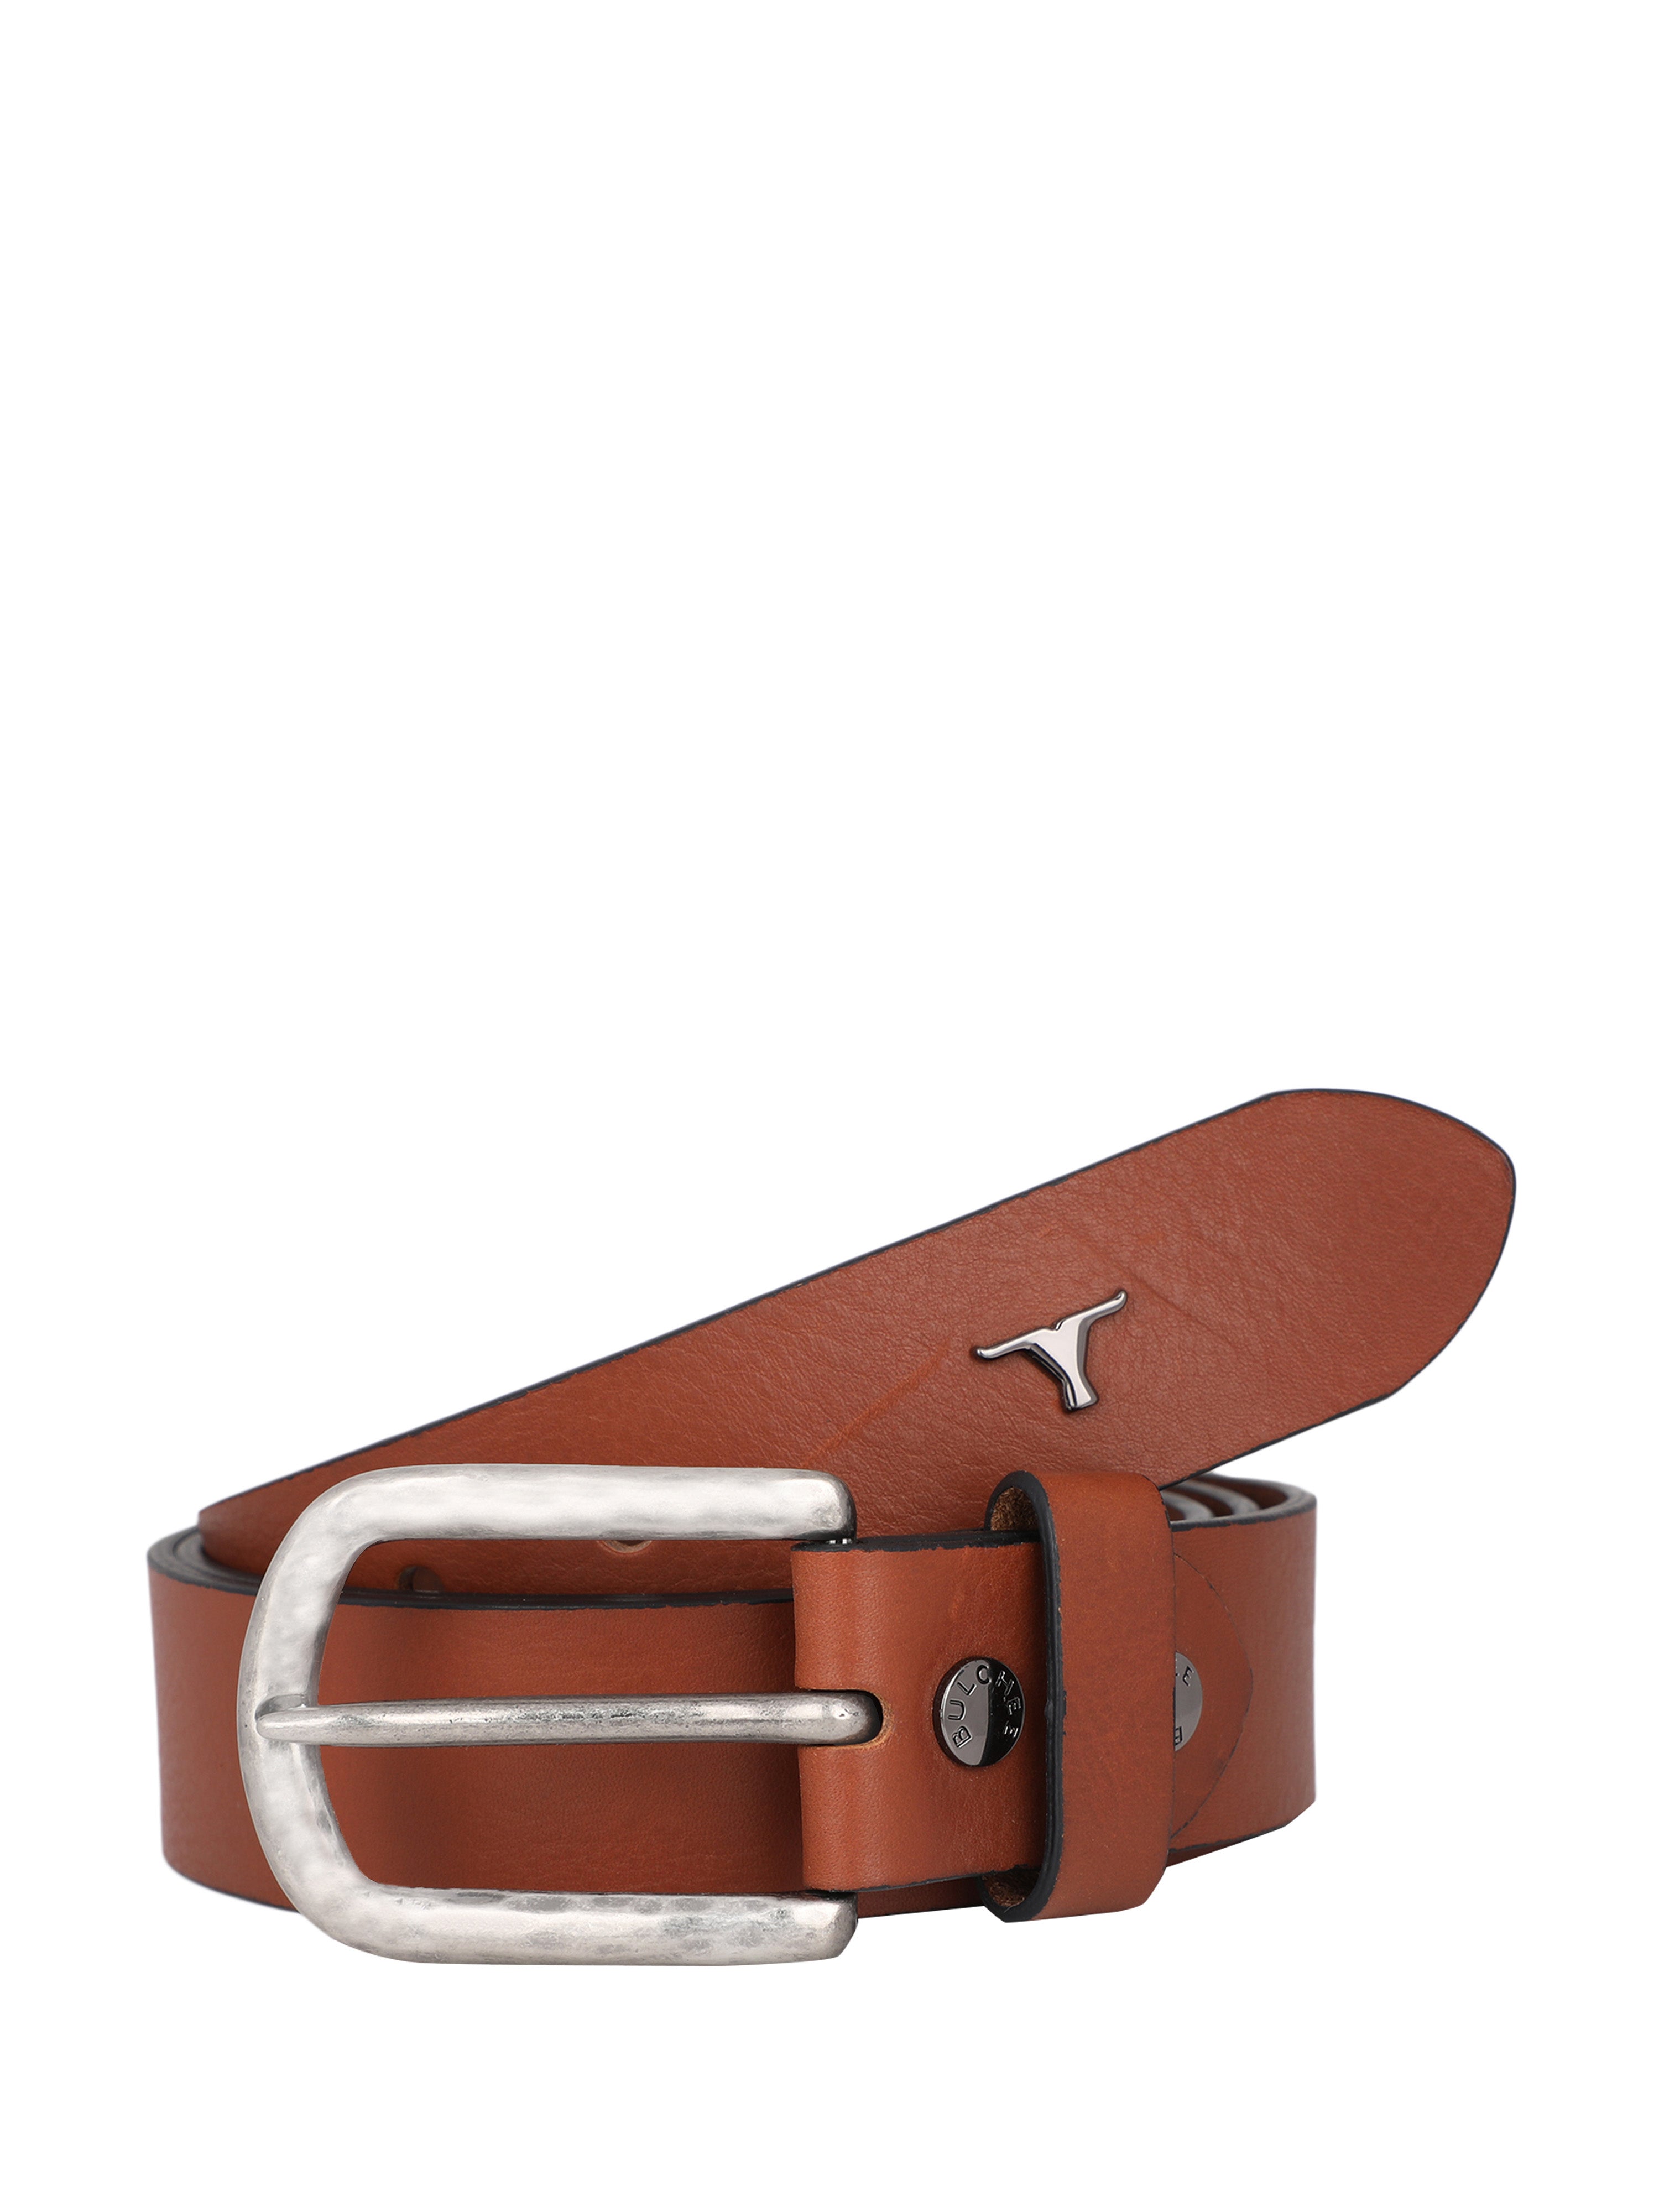 Bulchee Premium Collections Men's Full Grain Italian Leather Belt | Plain Jeans | Tan | BUL2168B